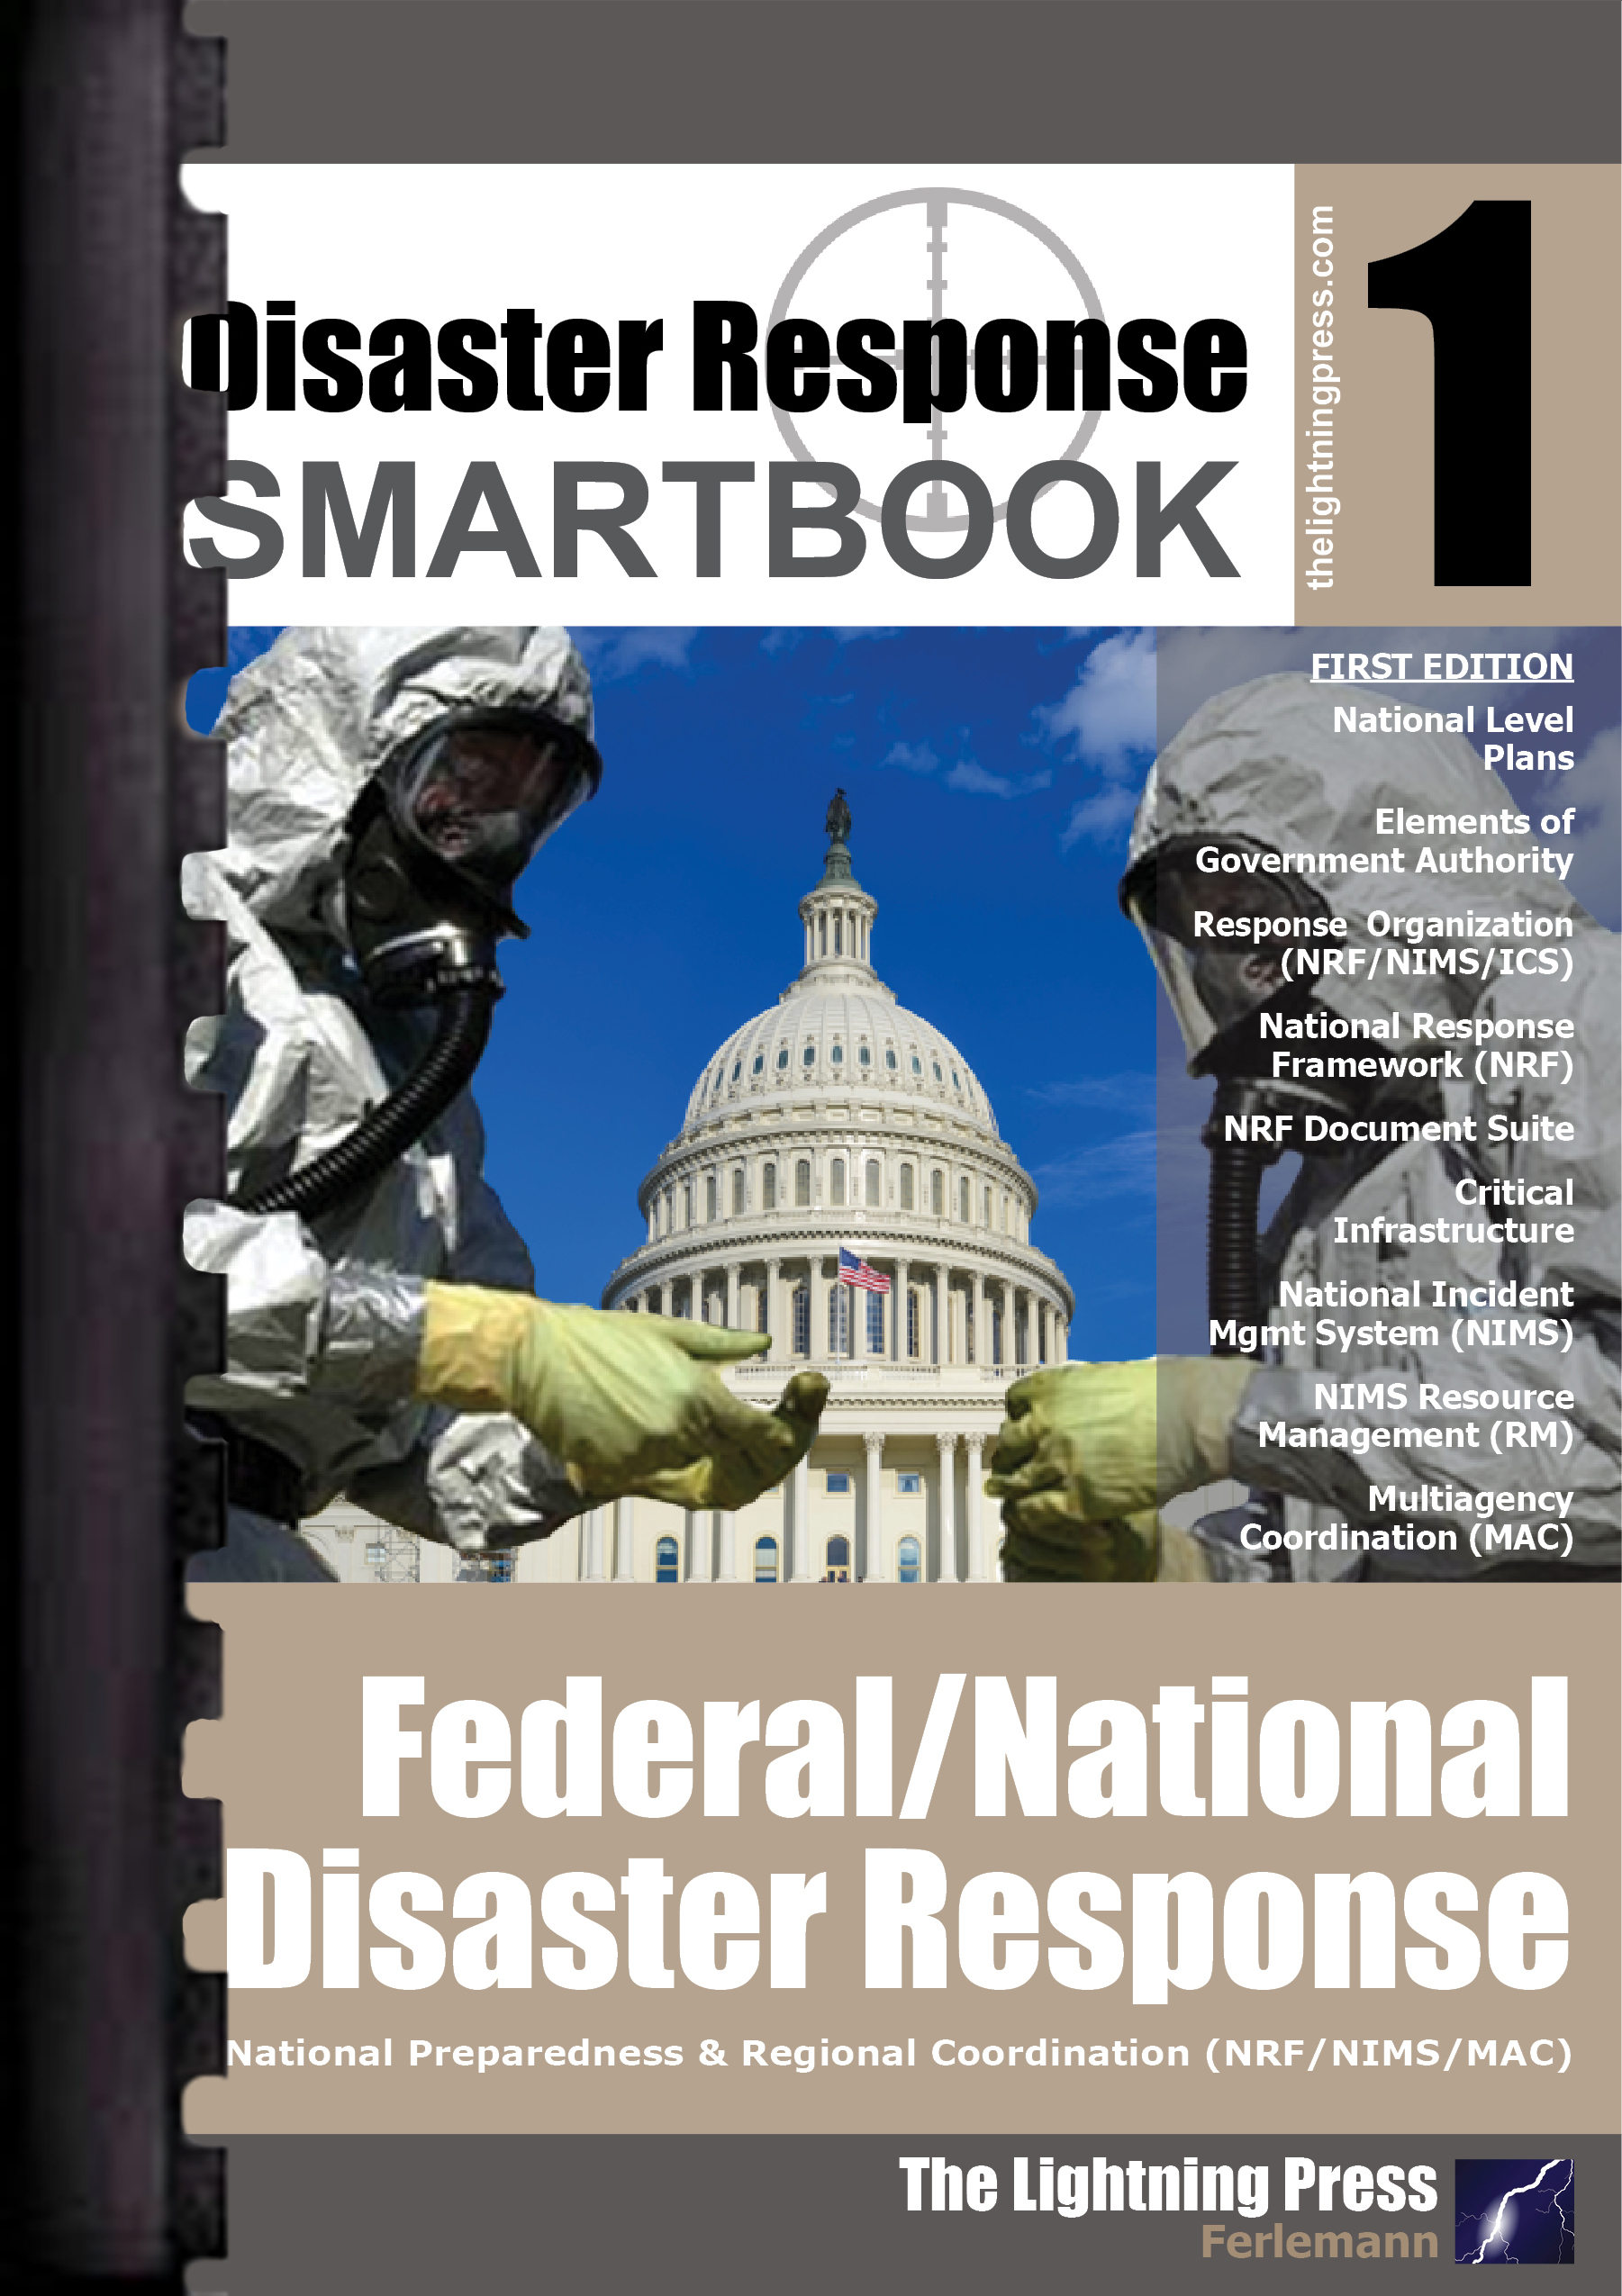 Disaster Response SMARTbook 1 – Federal/National Disaster Response